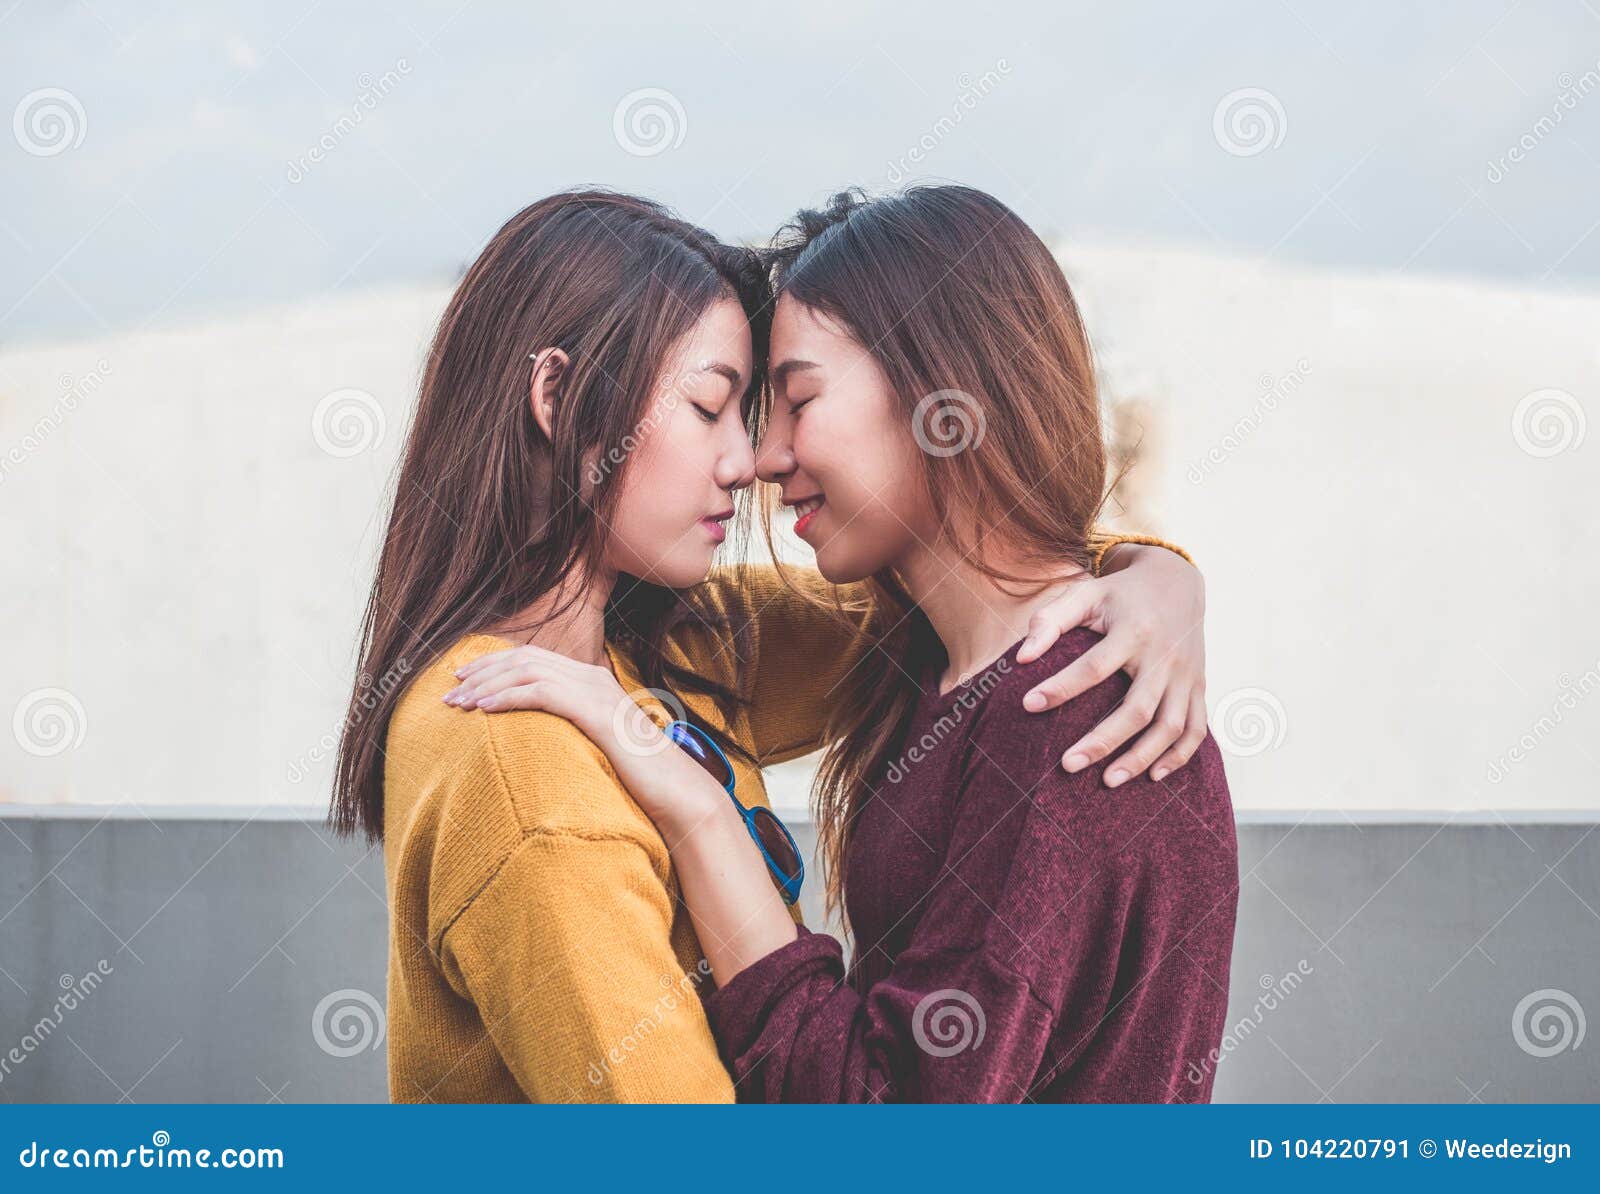 Asian Girls Kissing Fighting